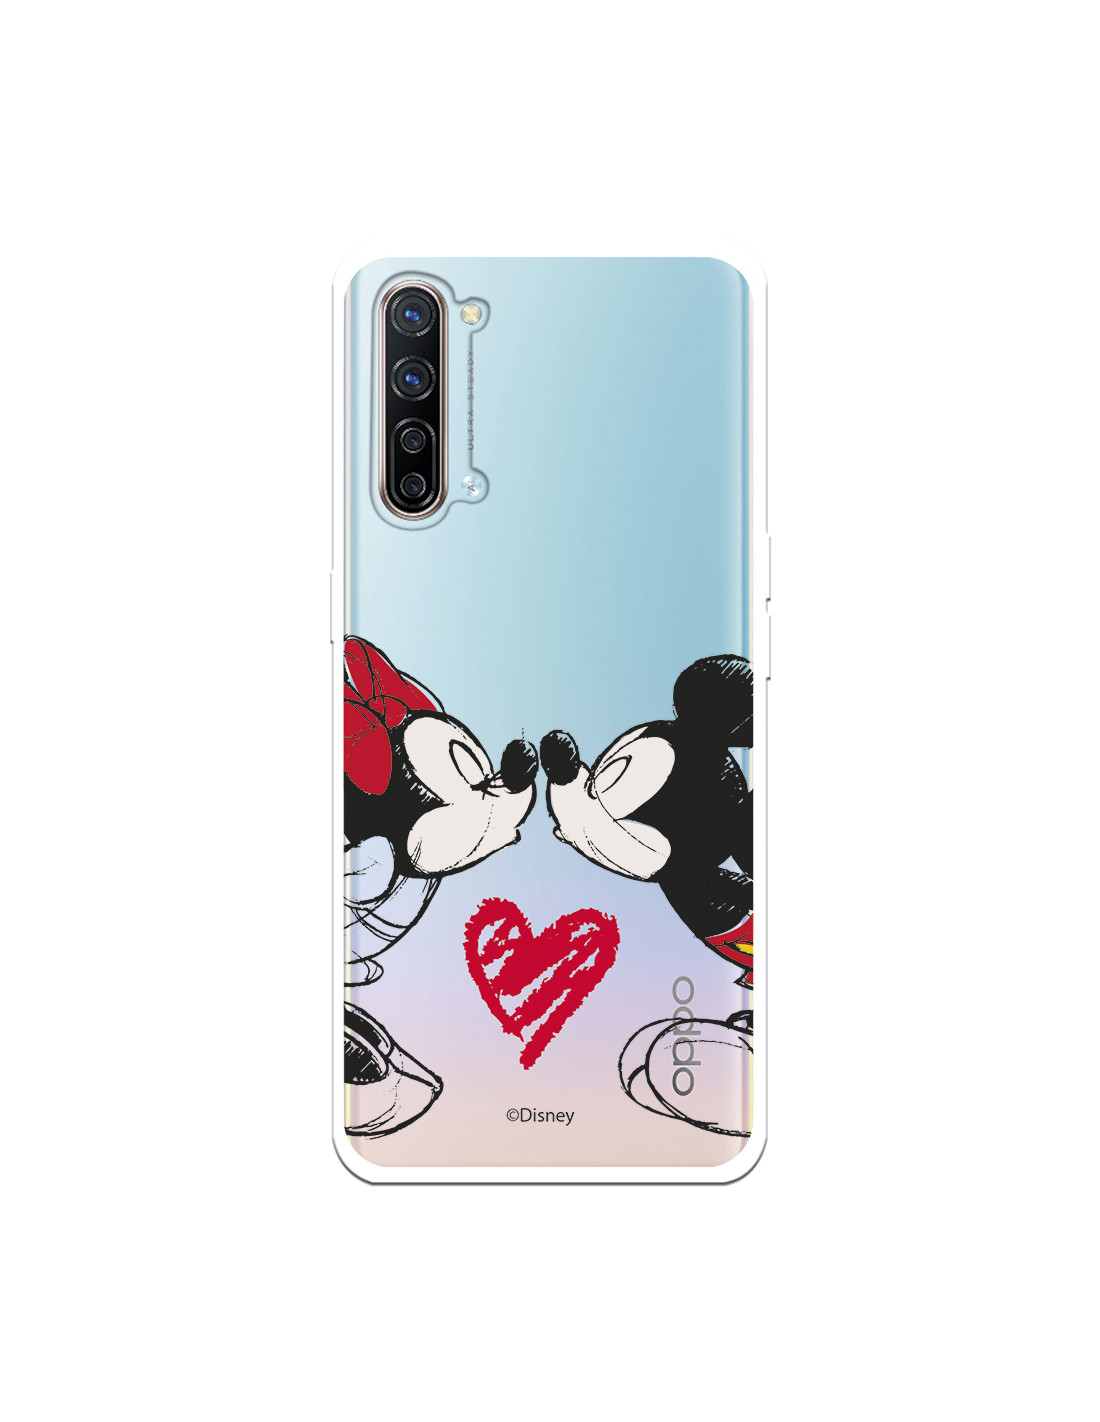 Capa para Oppo Find X2 Lite Oficial da Disney Mickey e Minnie